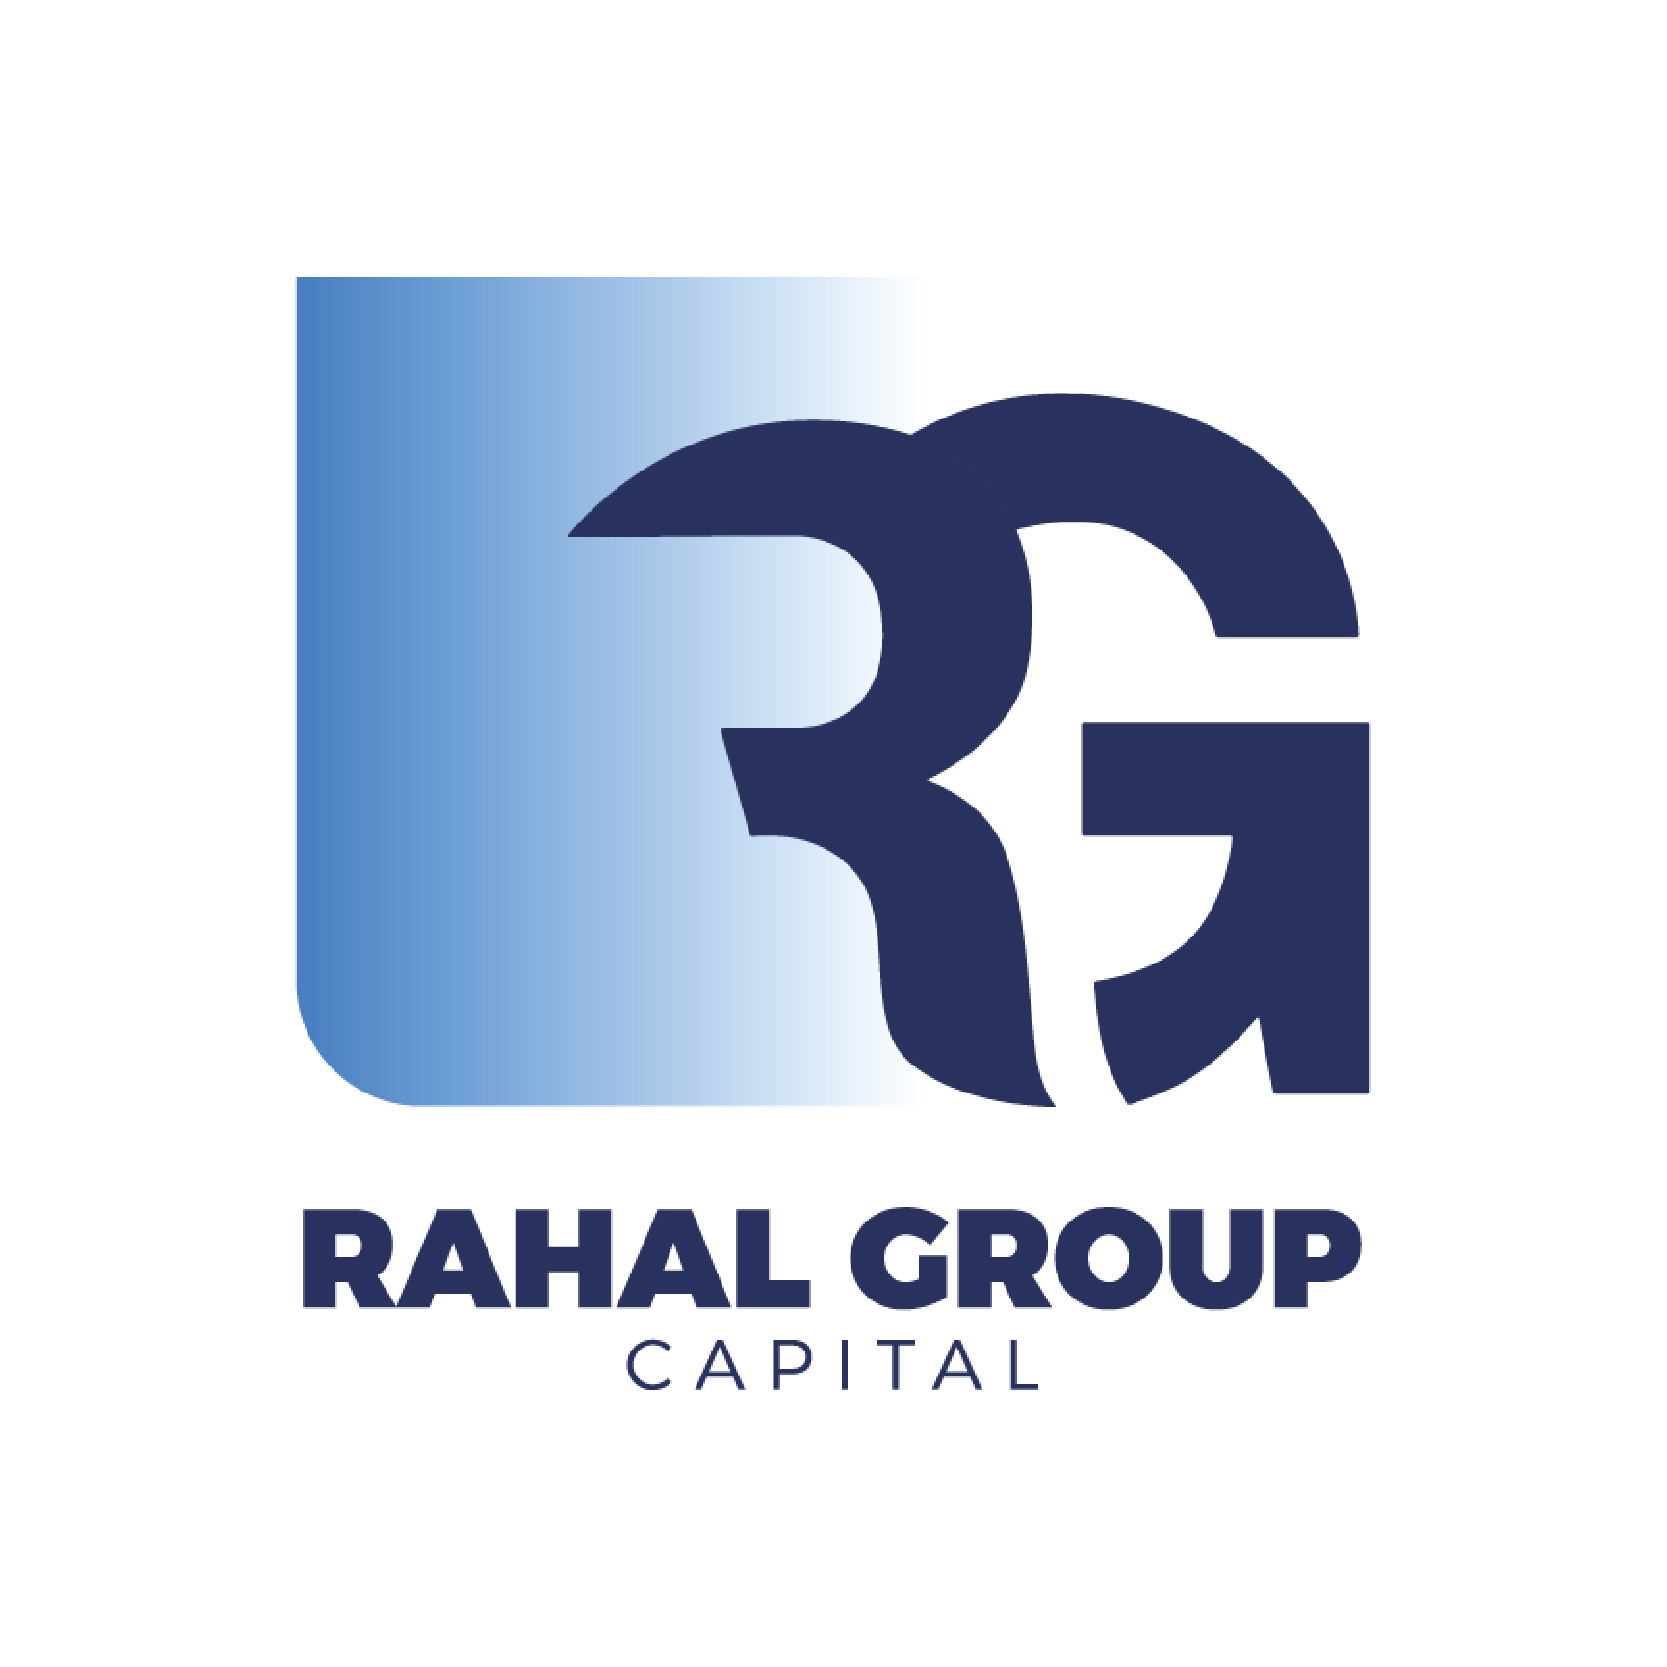 Rahal Group